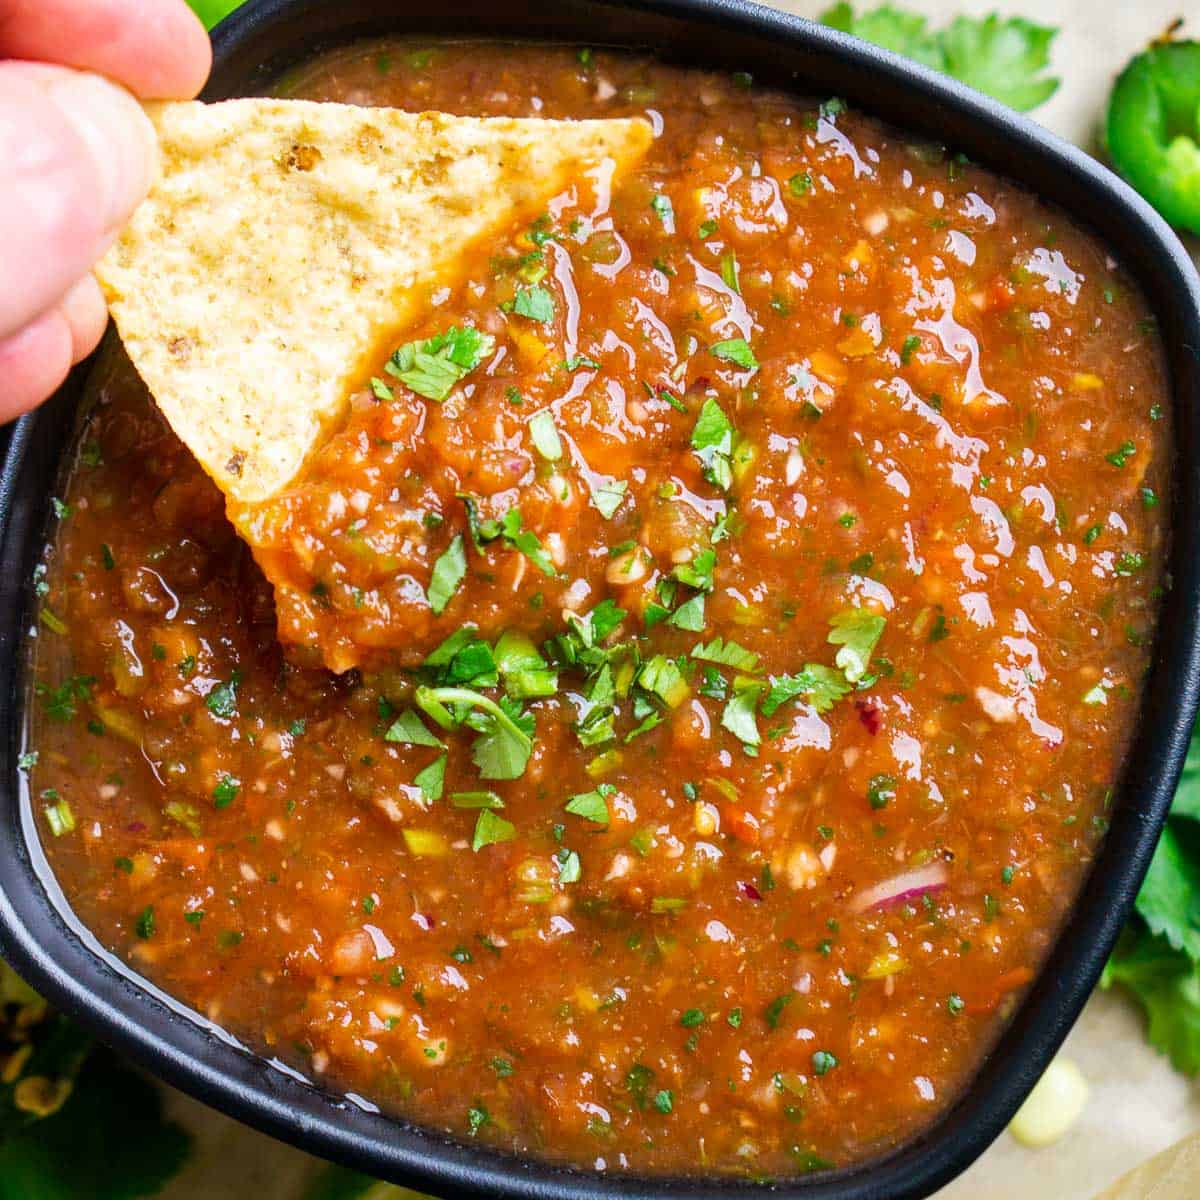 tortilla chip is dunked into blender salsa in a black bowl